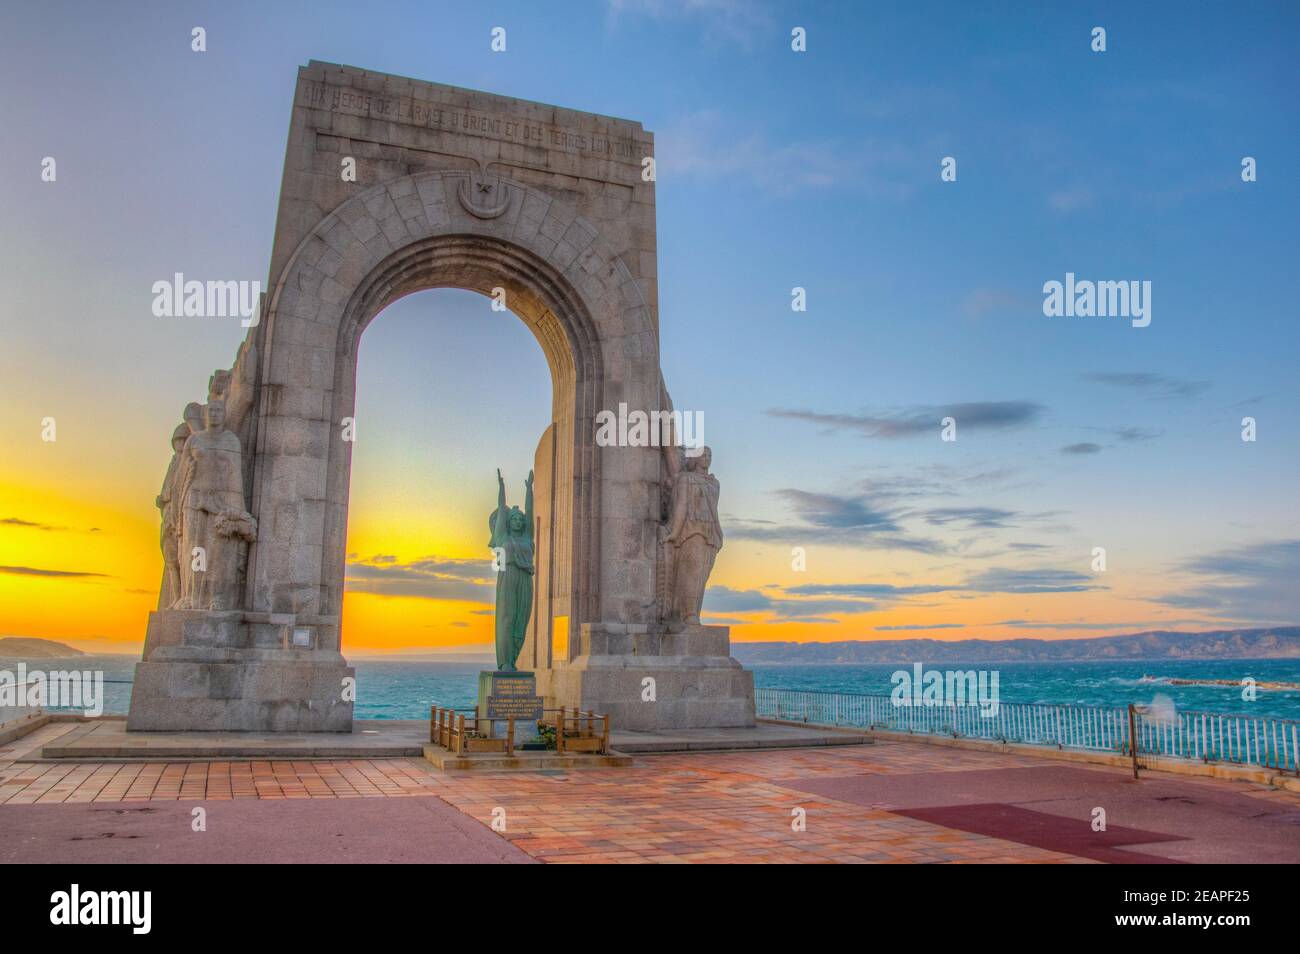 Sunset view la porte de L'orient monument situated at Marseille, France  Stock Photo - Alamy